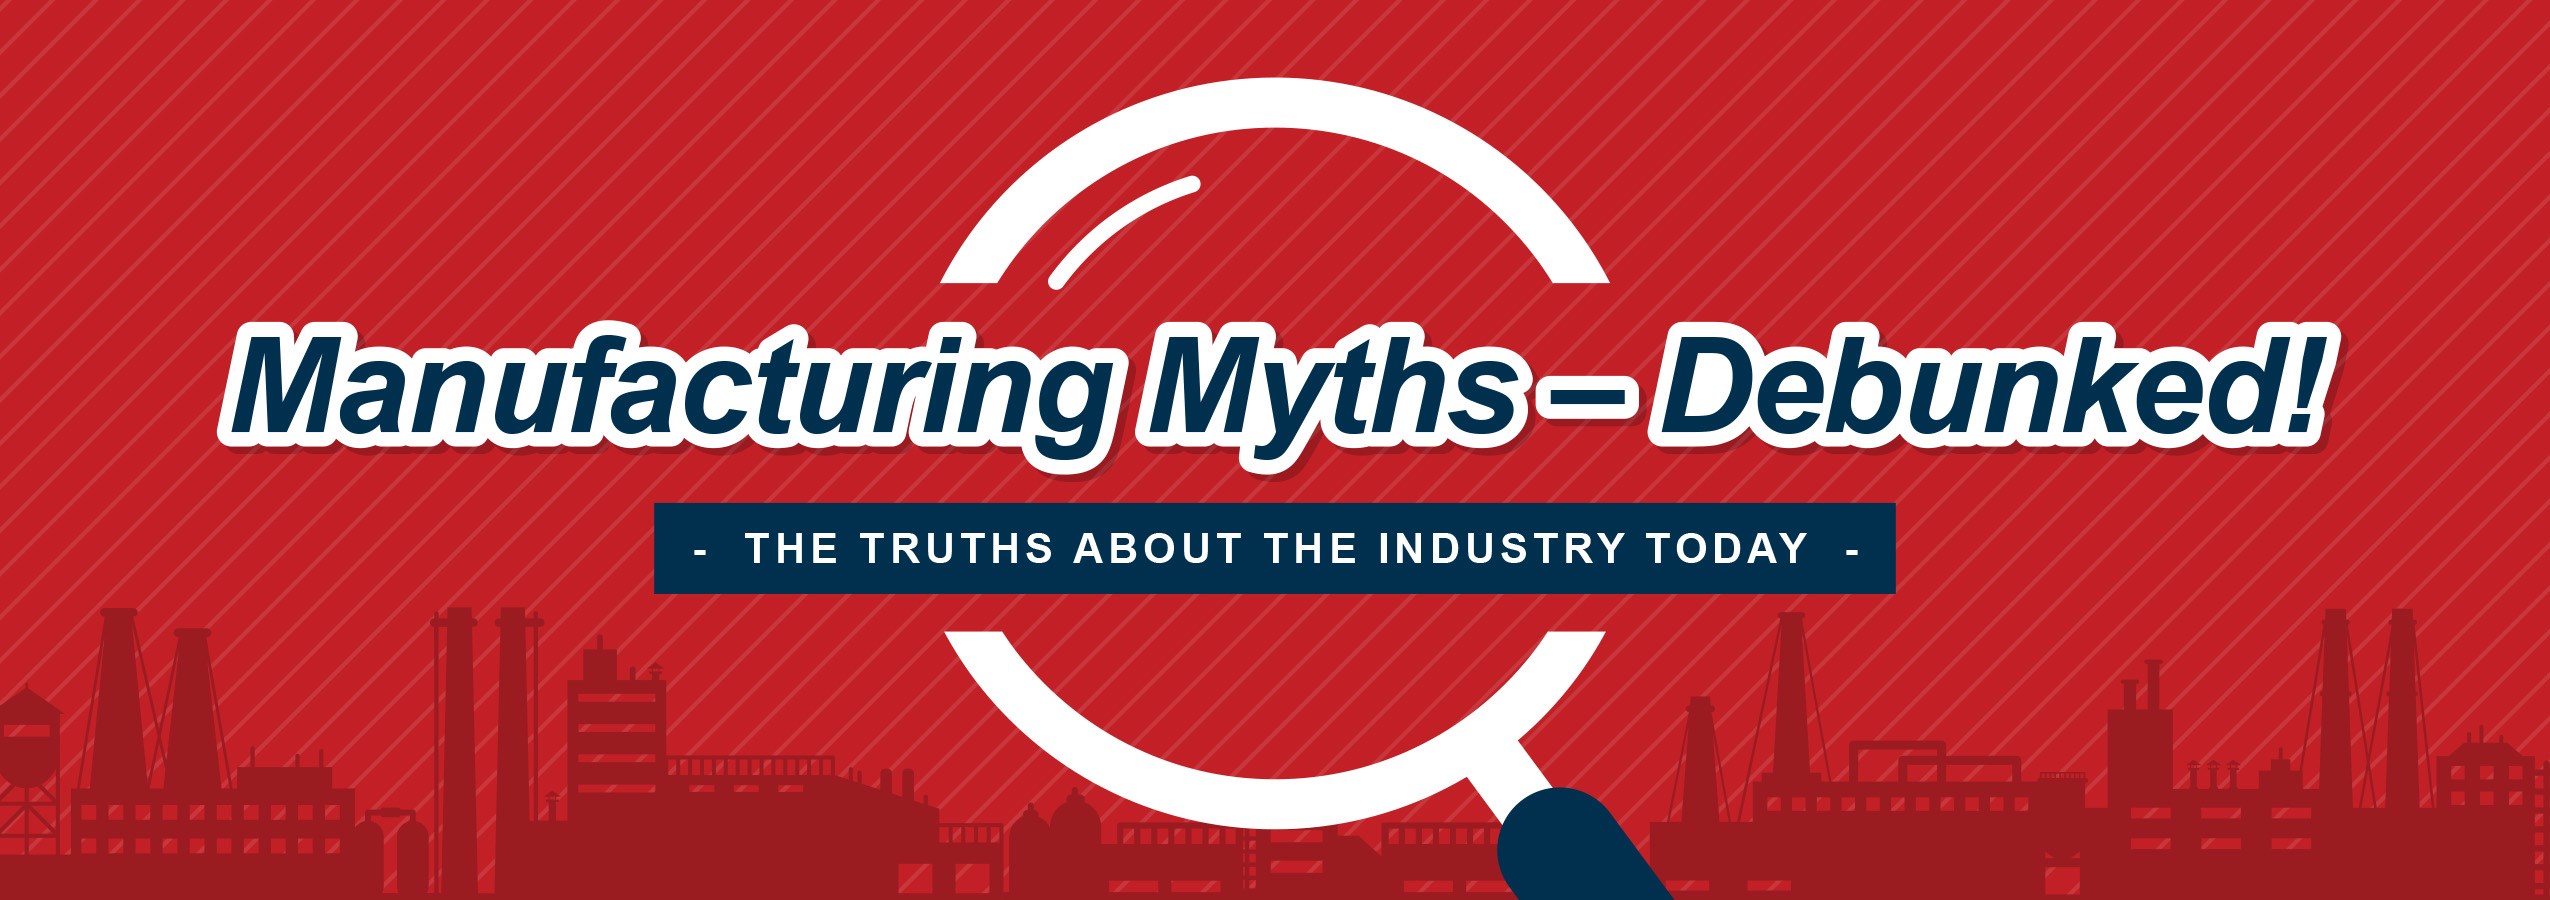 Manufacturing Myths - Debunked!